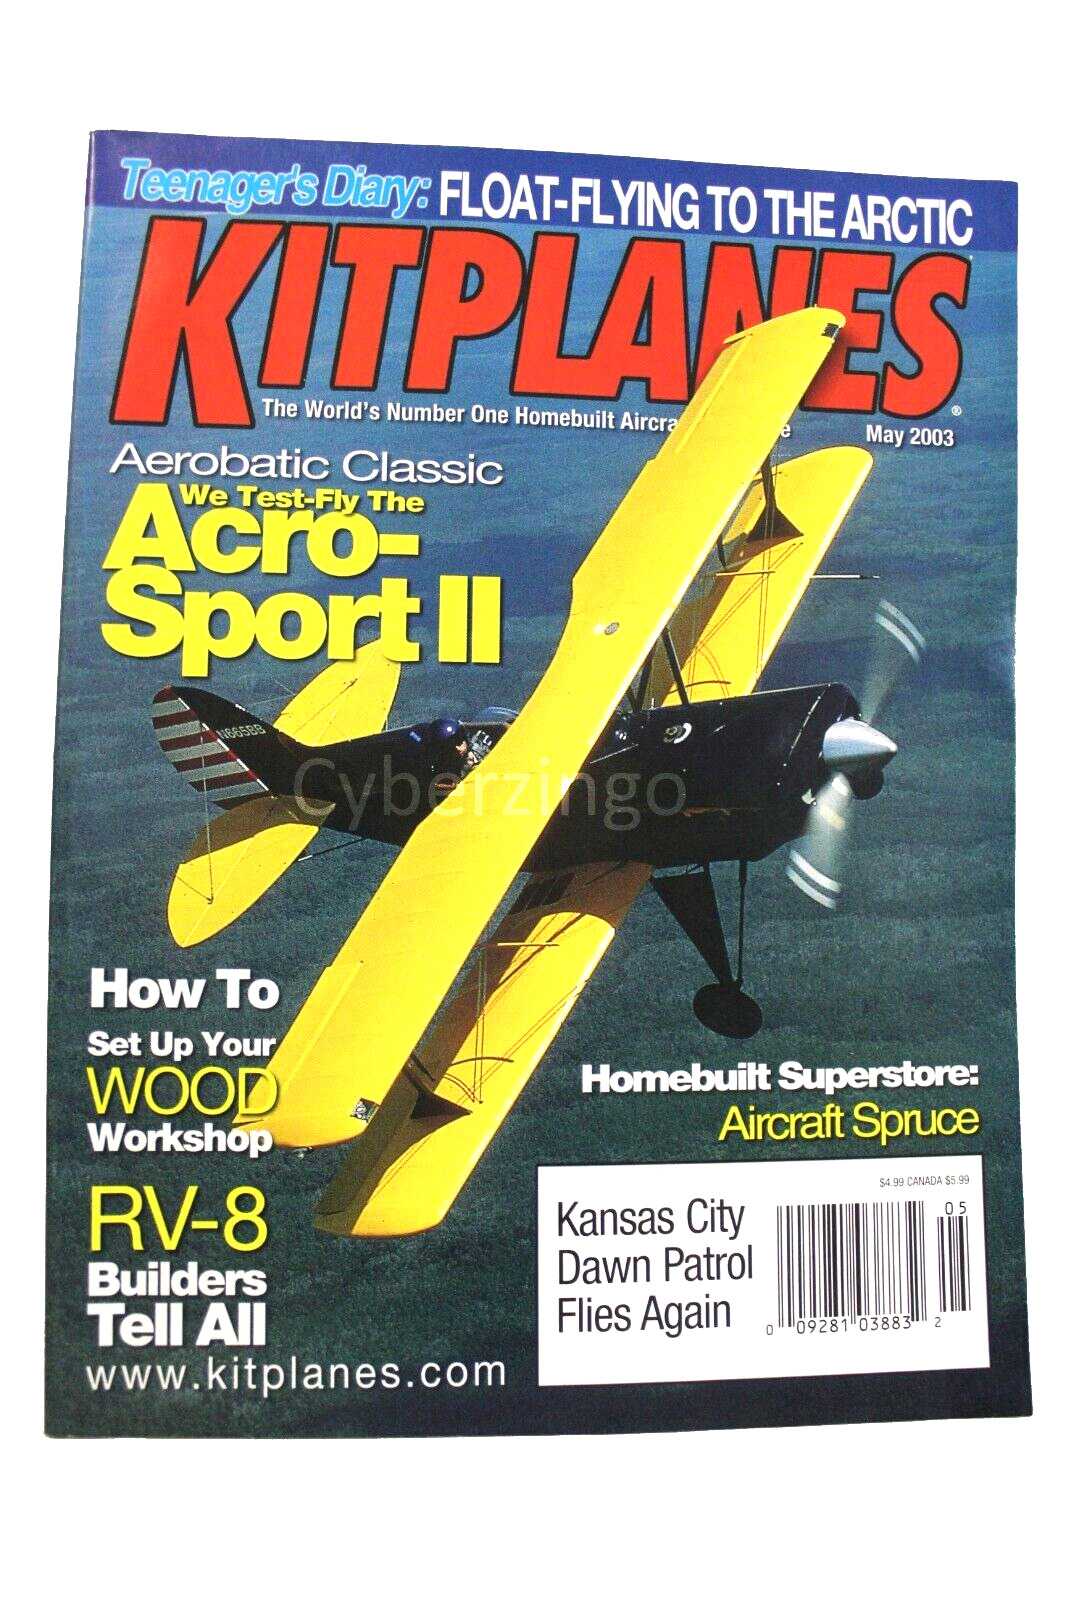 Kitplanes May 2003 Vol 20 No 5 Vintage Magazine